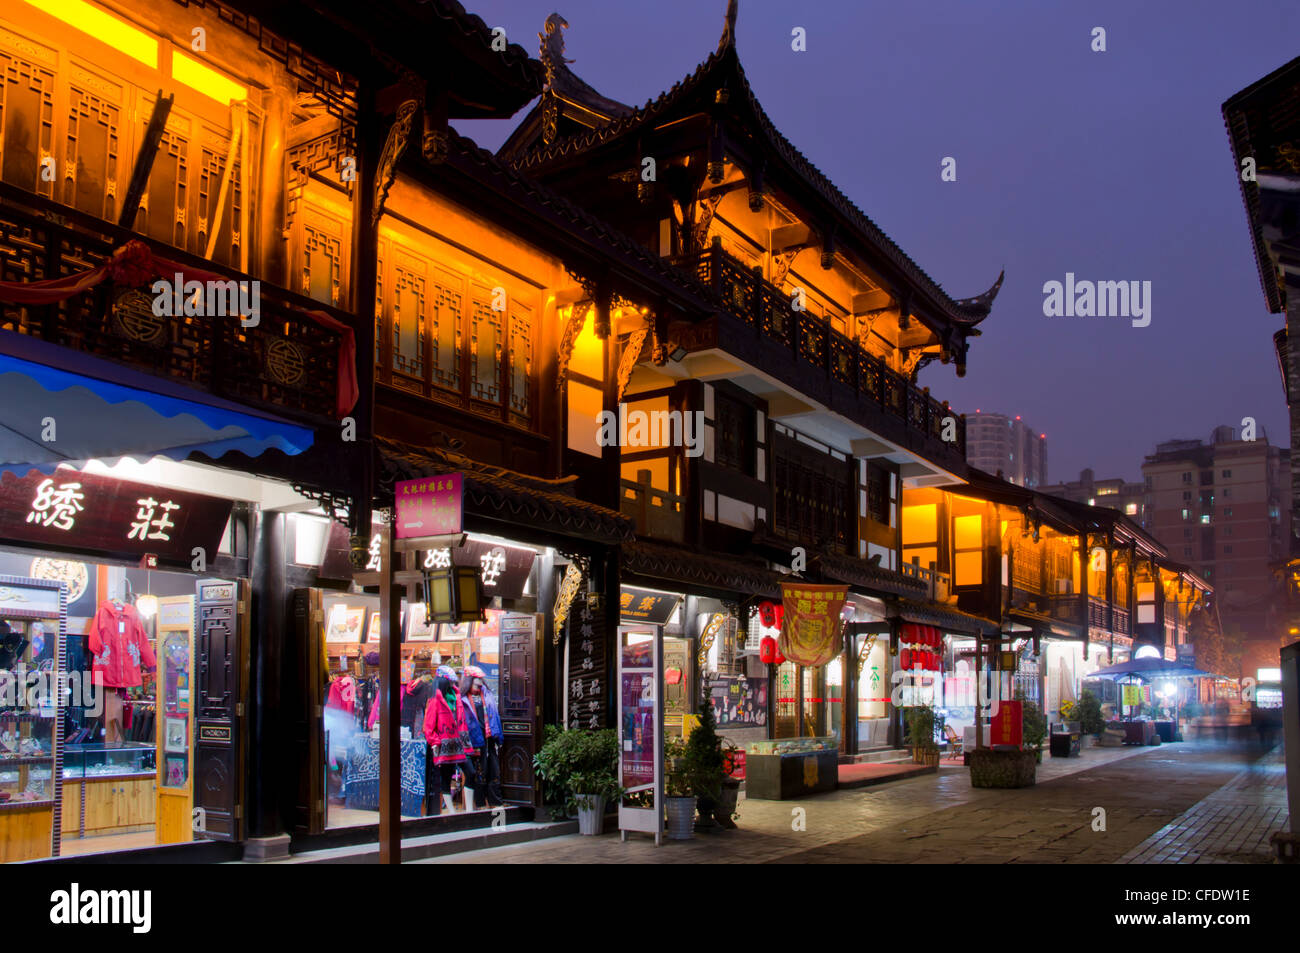 Wenshu Yuan ancient district at dusk, Chengdu, Sichuan, China, Asia Stock Photo